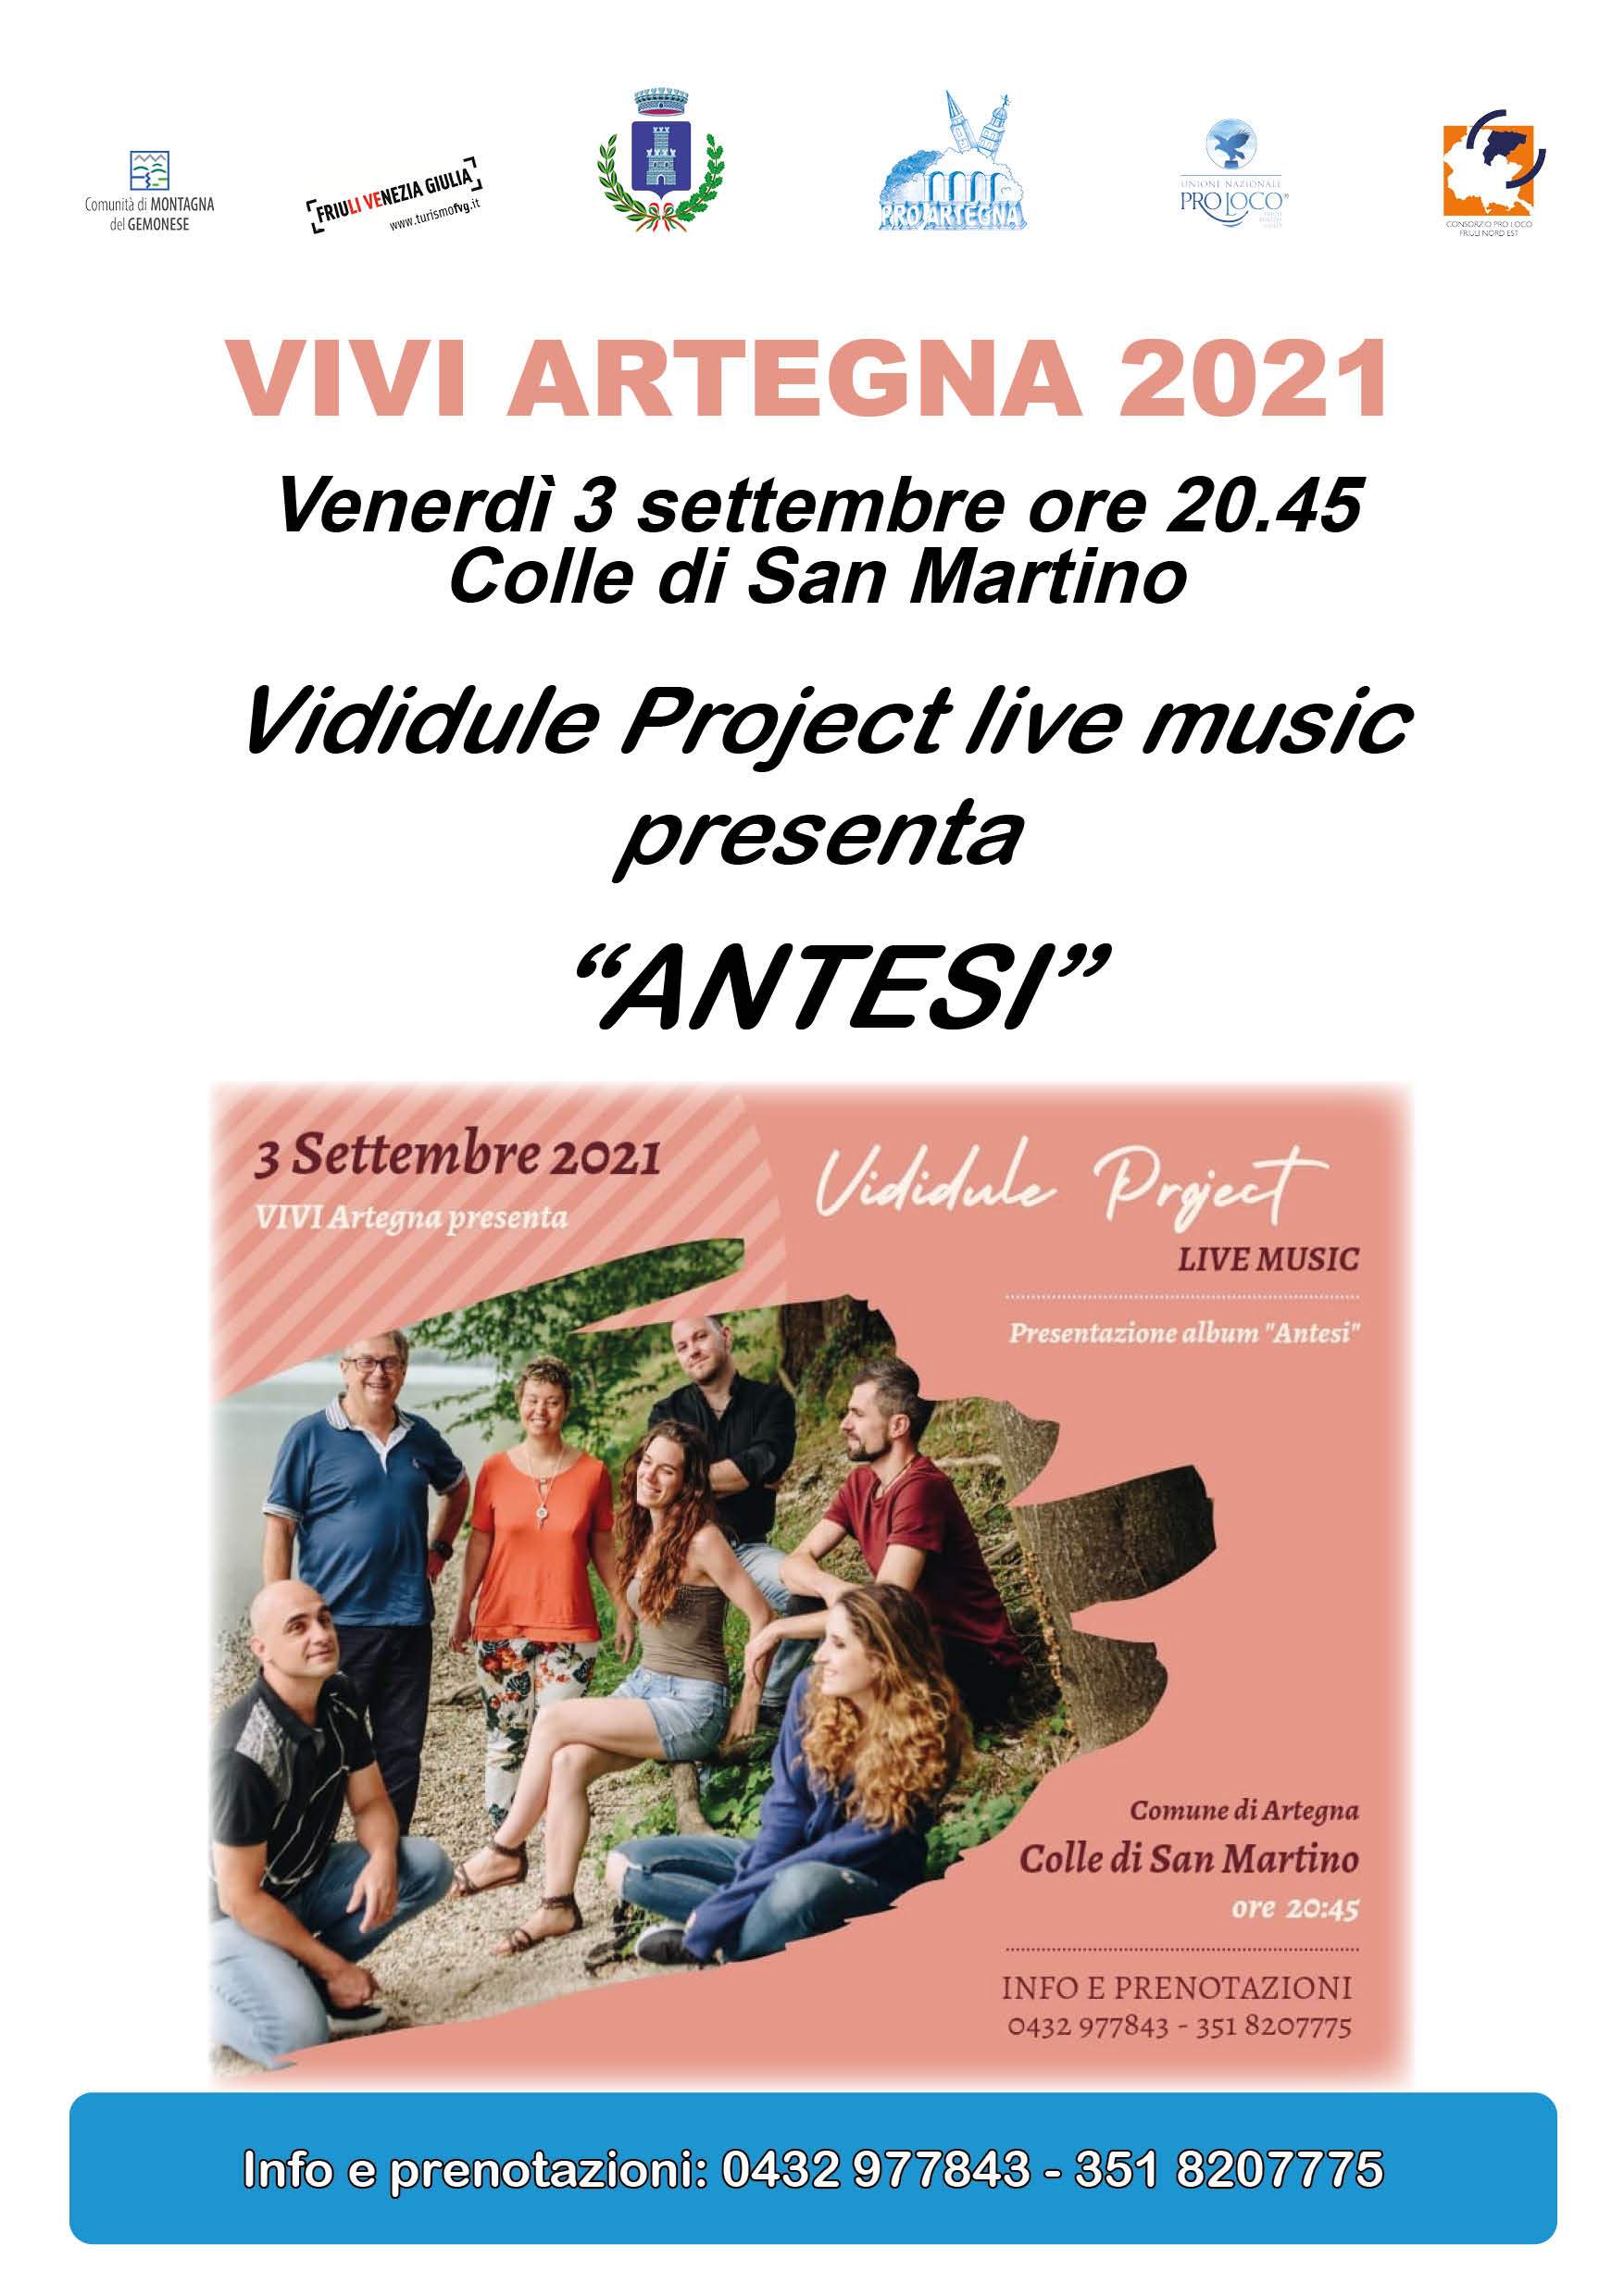 Vididule Project live music presenta “Antesi”